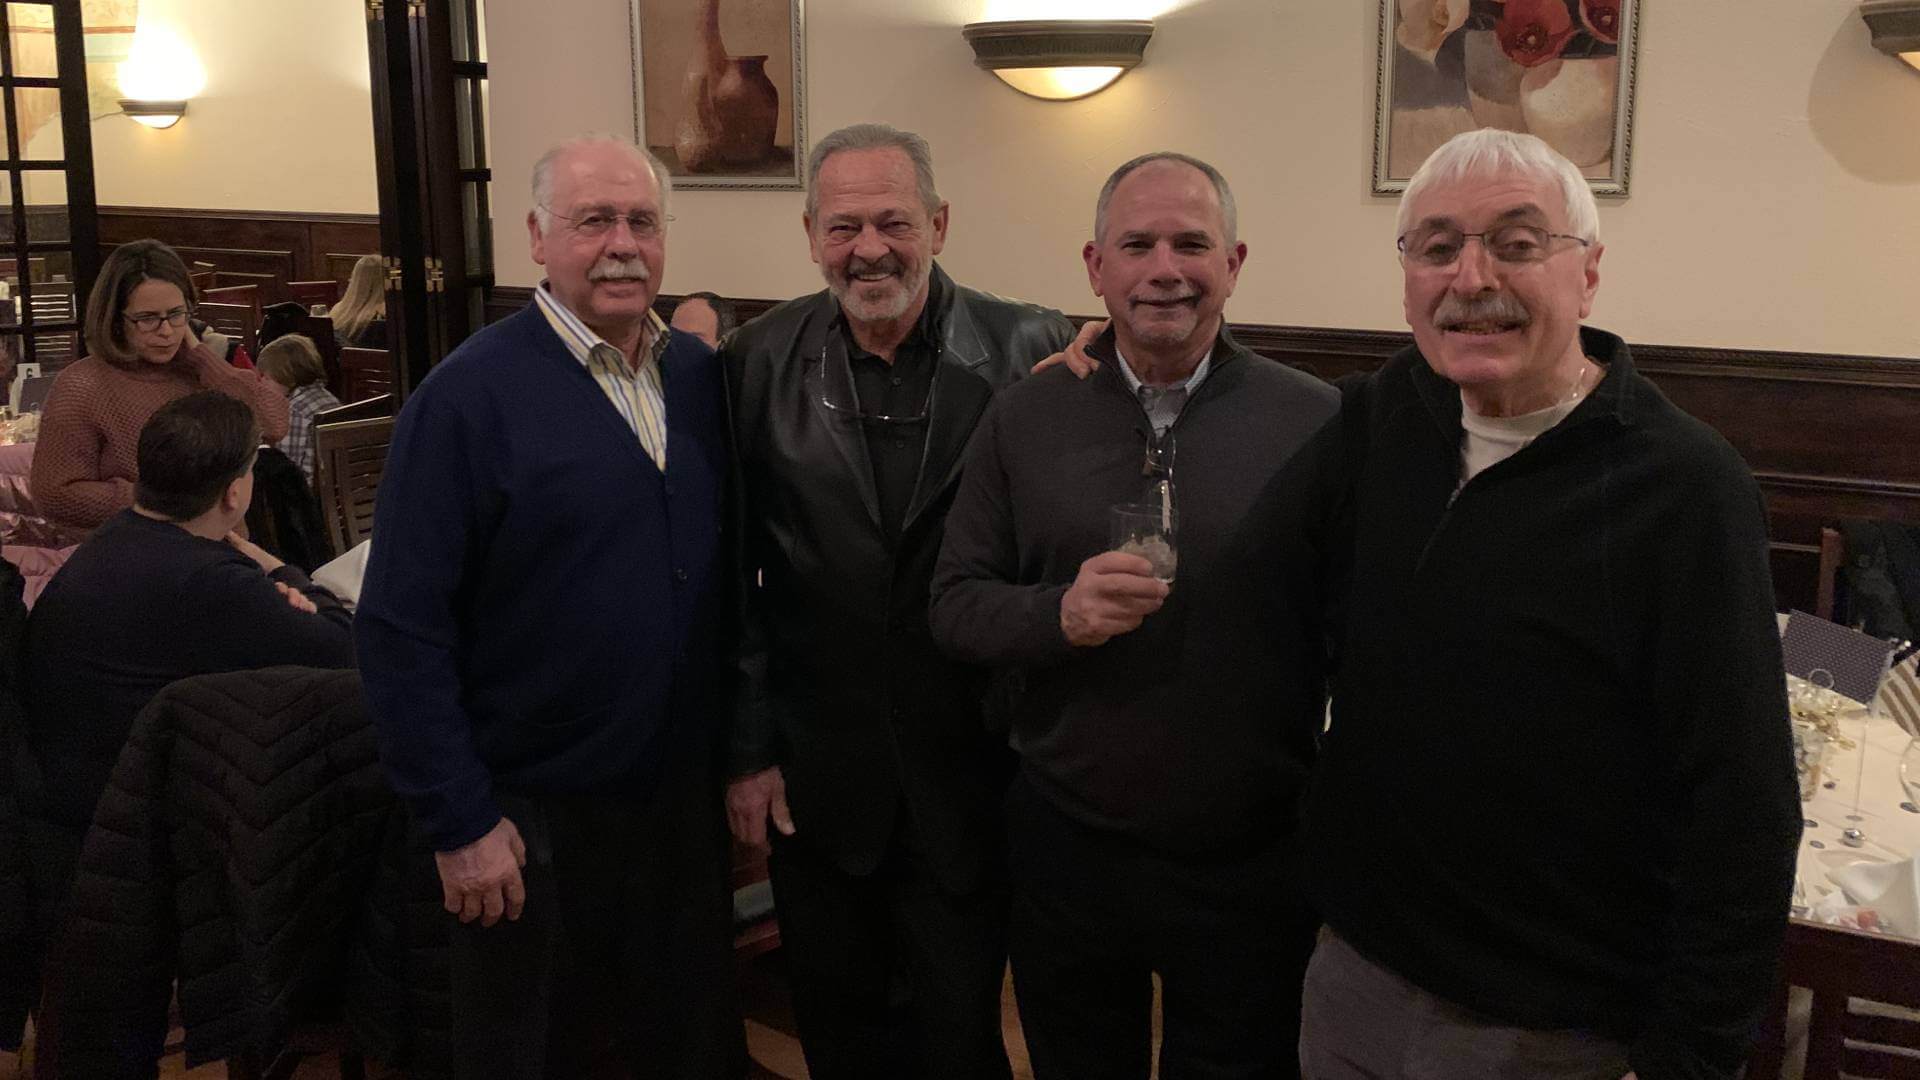 David Bernsteins surprise 70th Birthday Party-February 2020: Craig Raucher, Benny Waxman, Ralph Behar, Micth “Nippy” Newman (Davids Daughter left background)